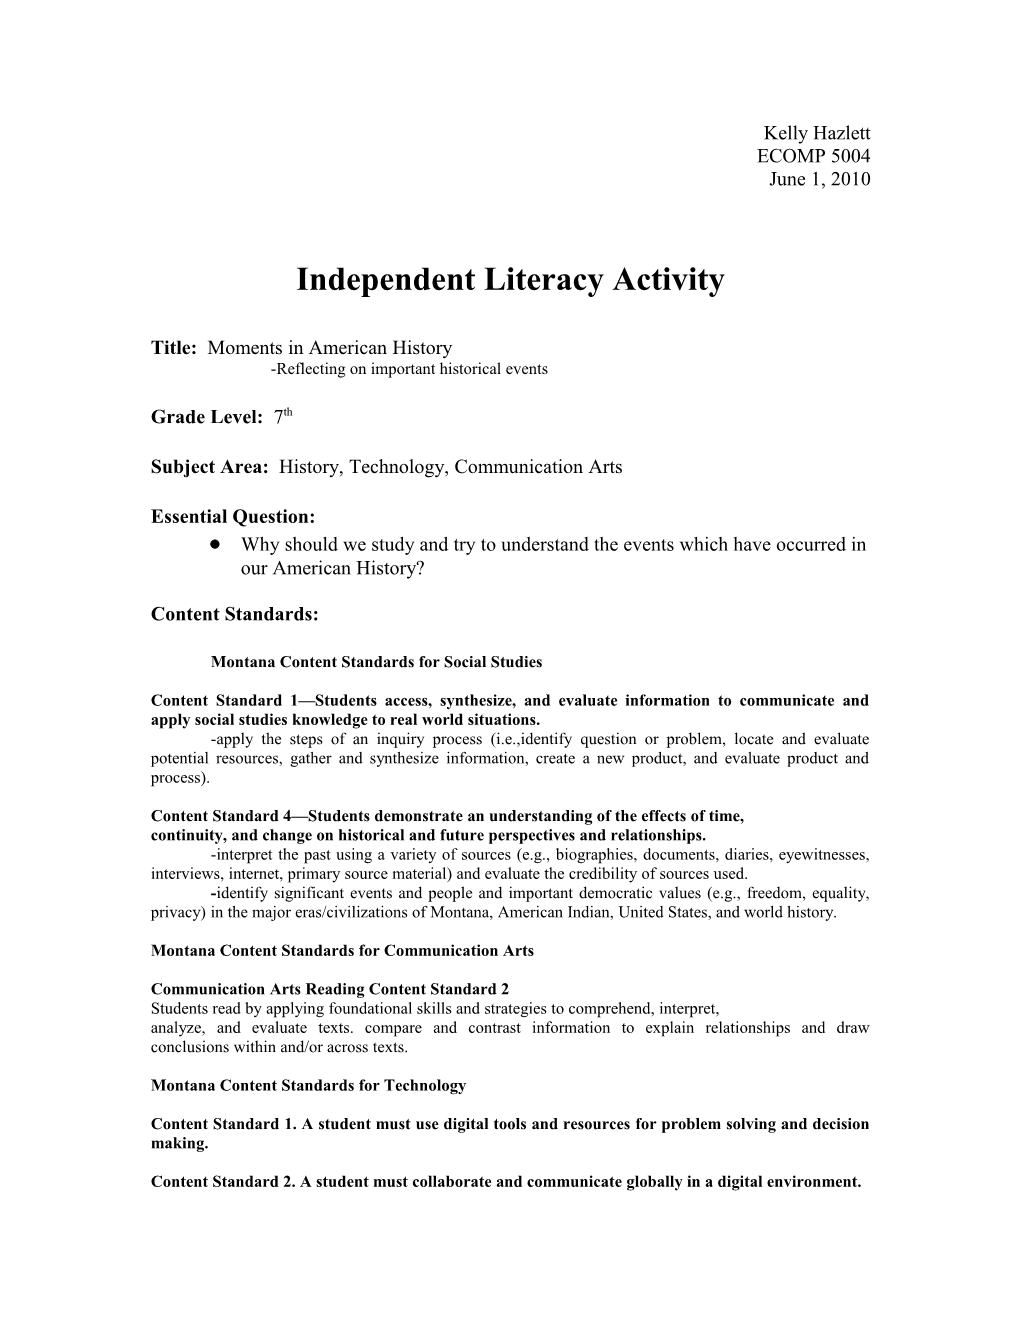 Independent Literacy Activity